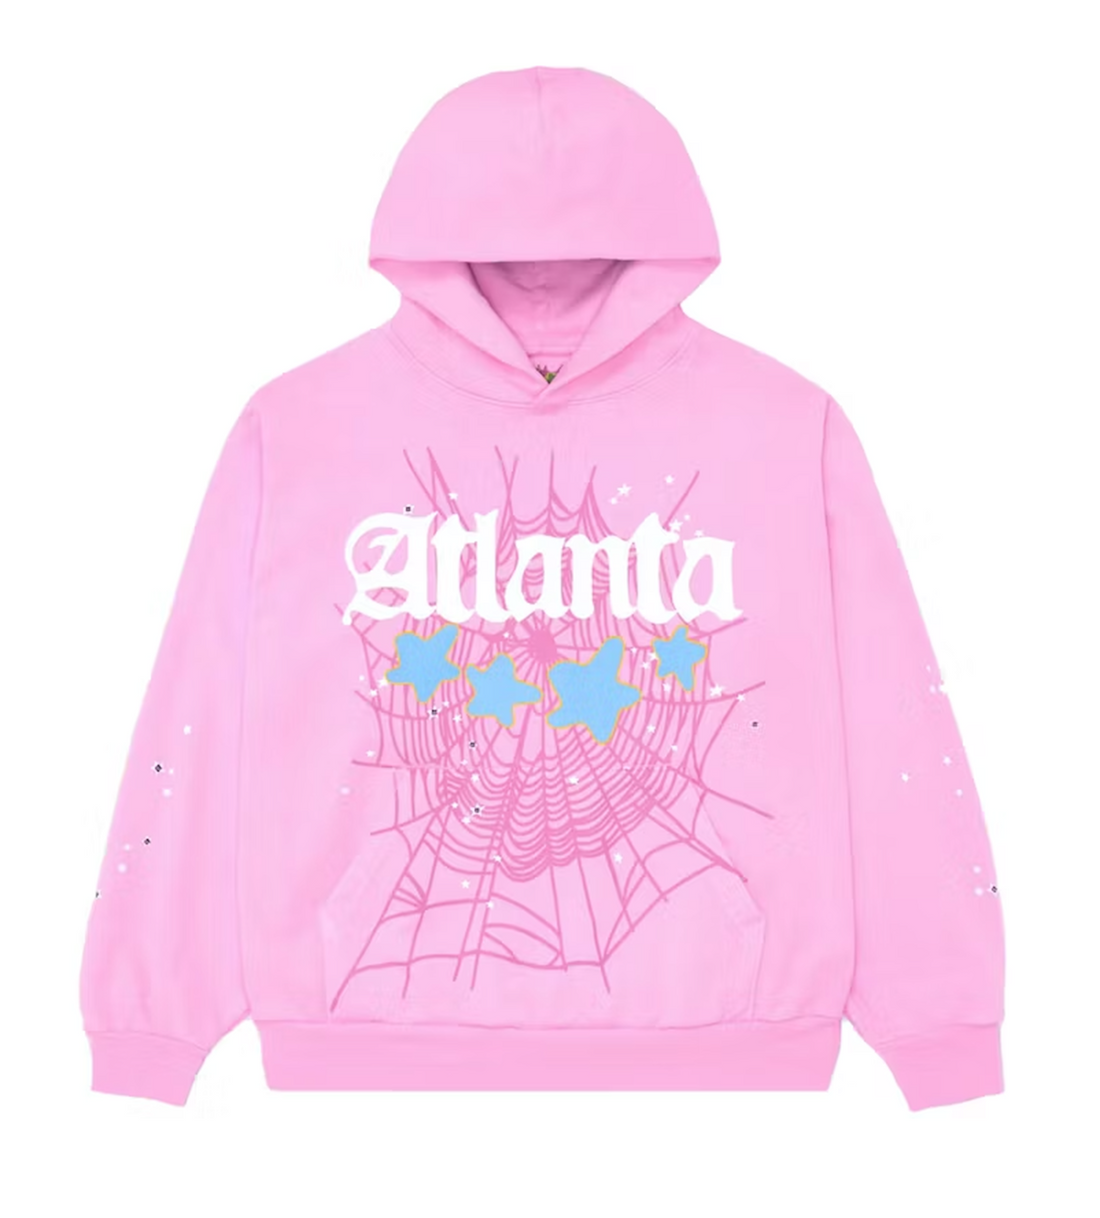 Product Image Of Sp5der Pink Atlanta Hoodie Front View 